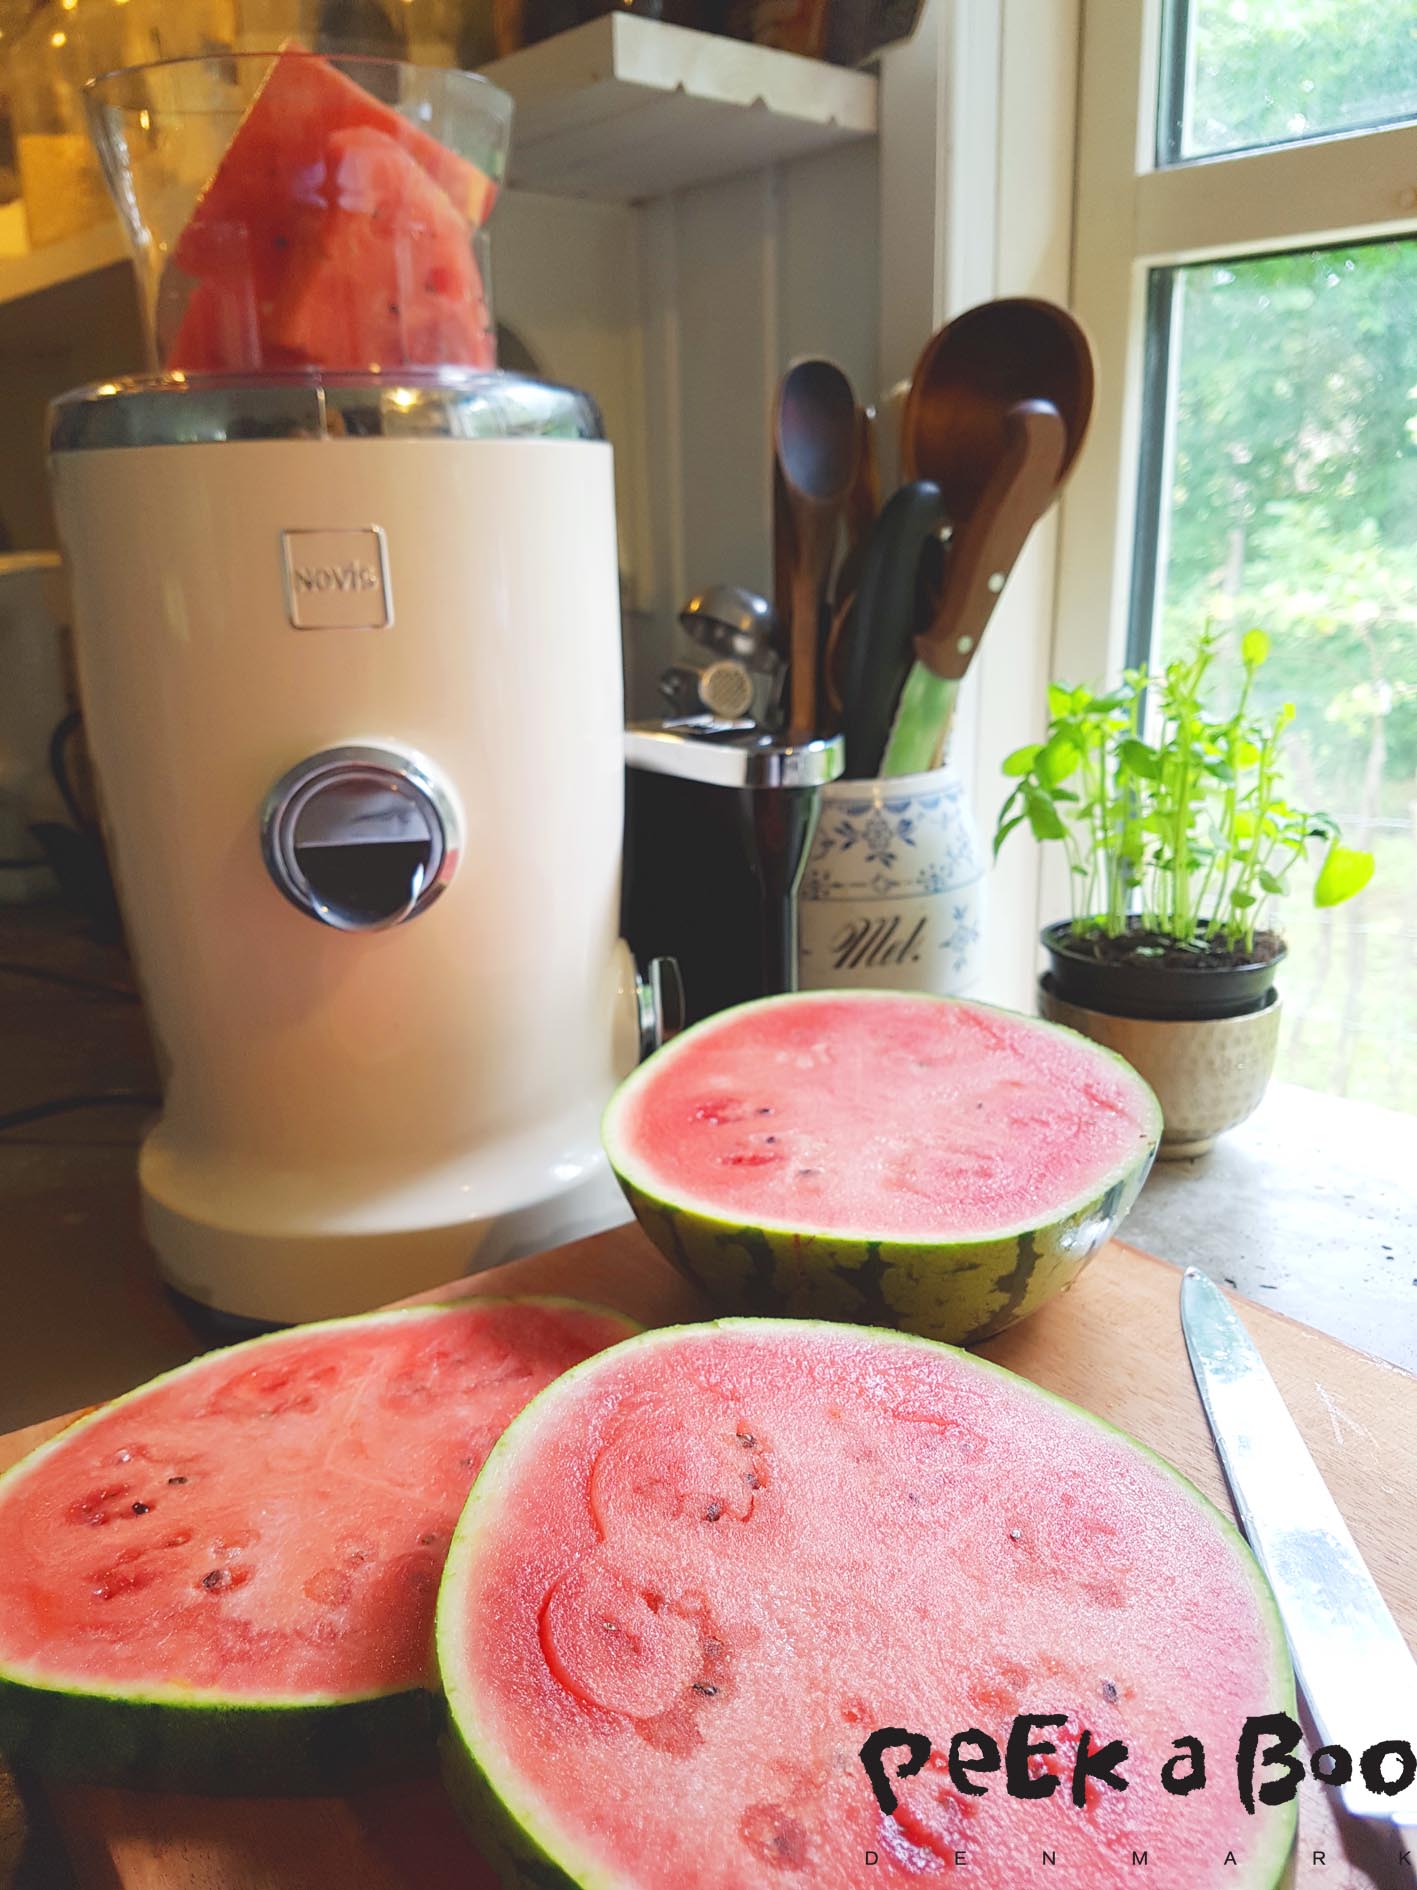 Watermelon juice made on the Novis Vita Juicer.